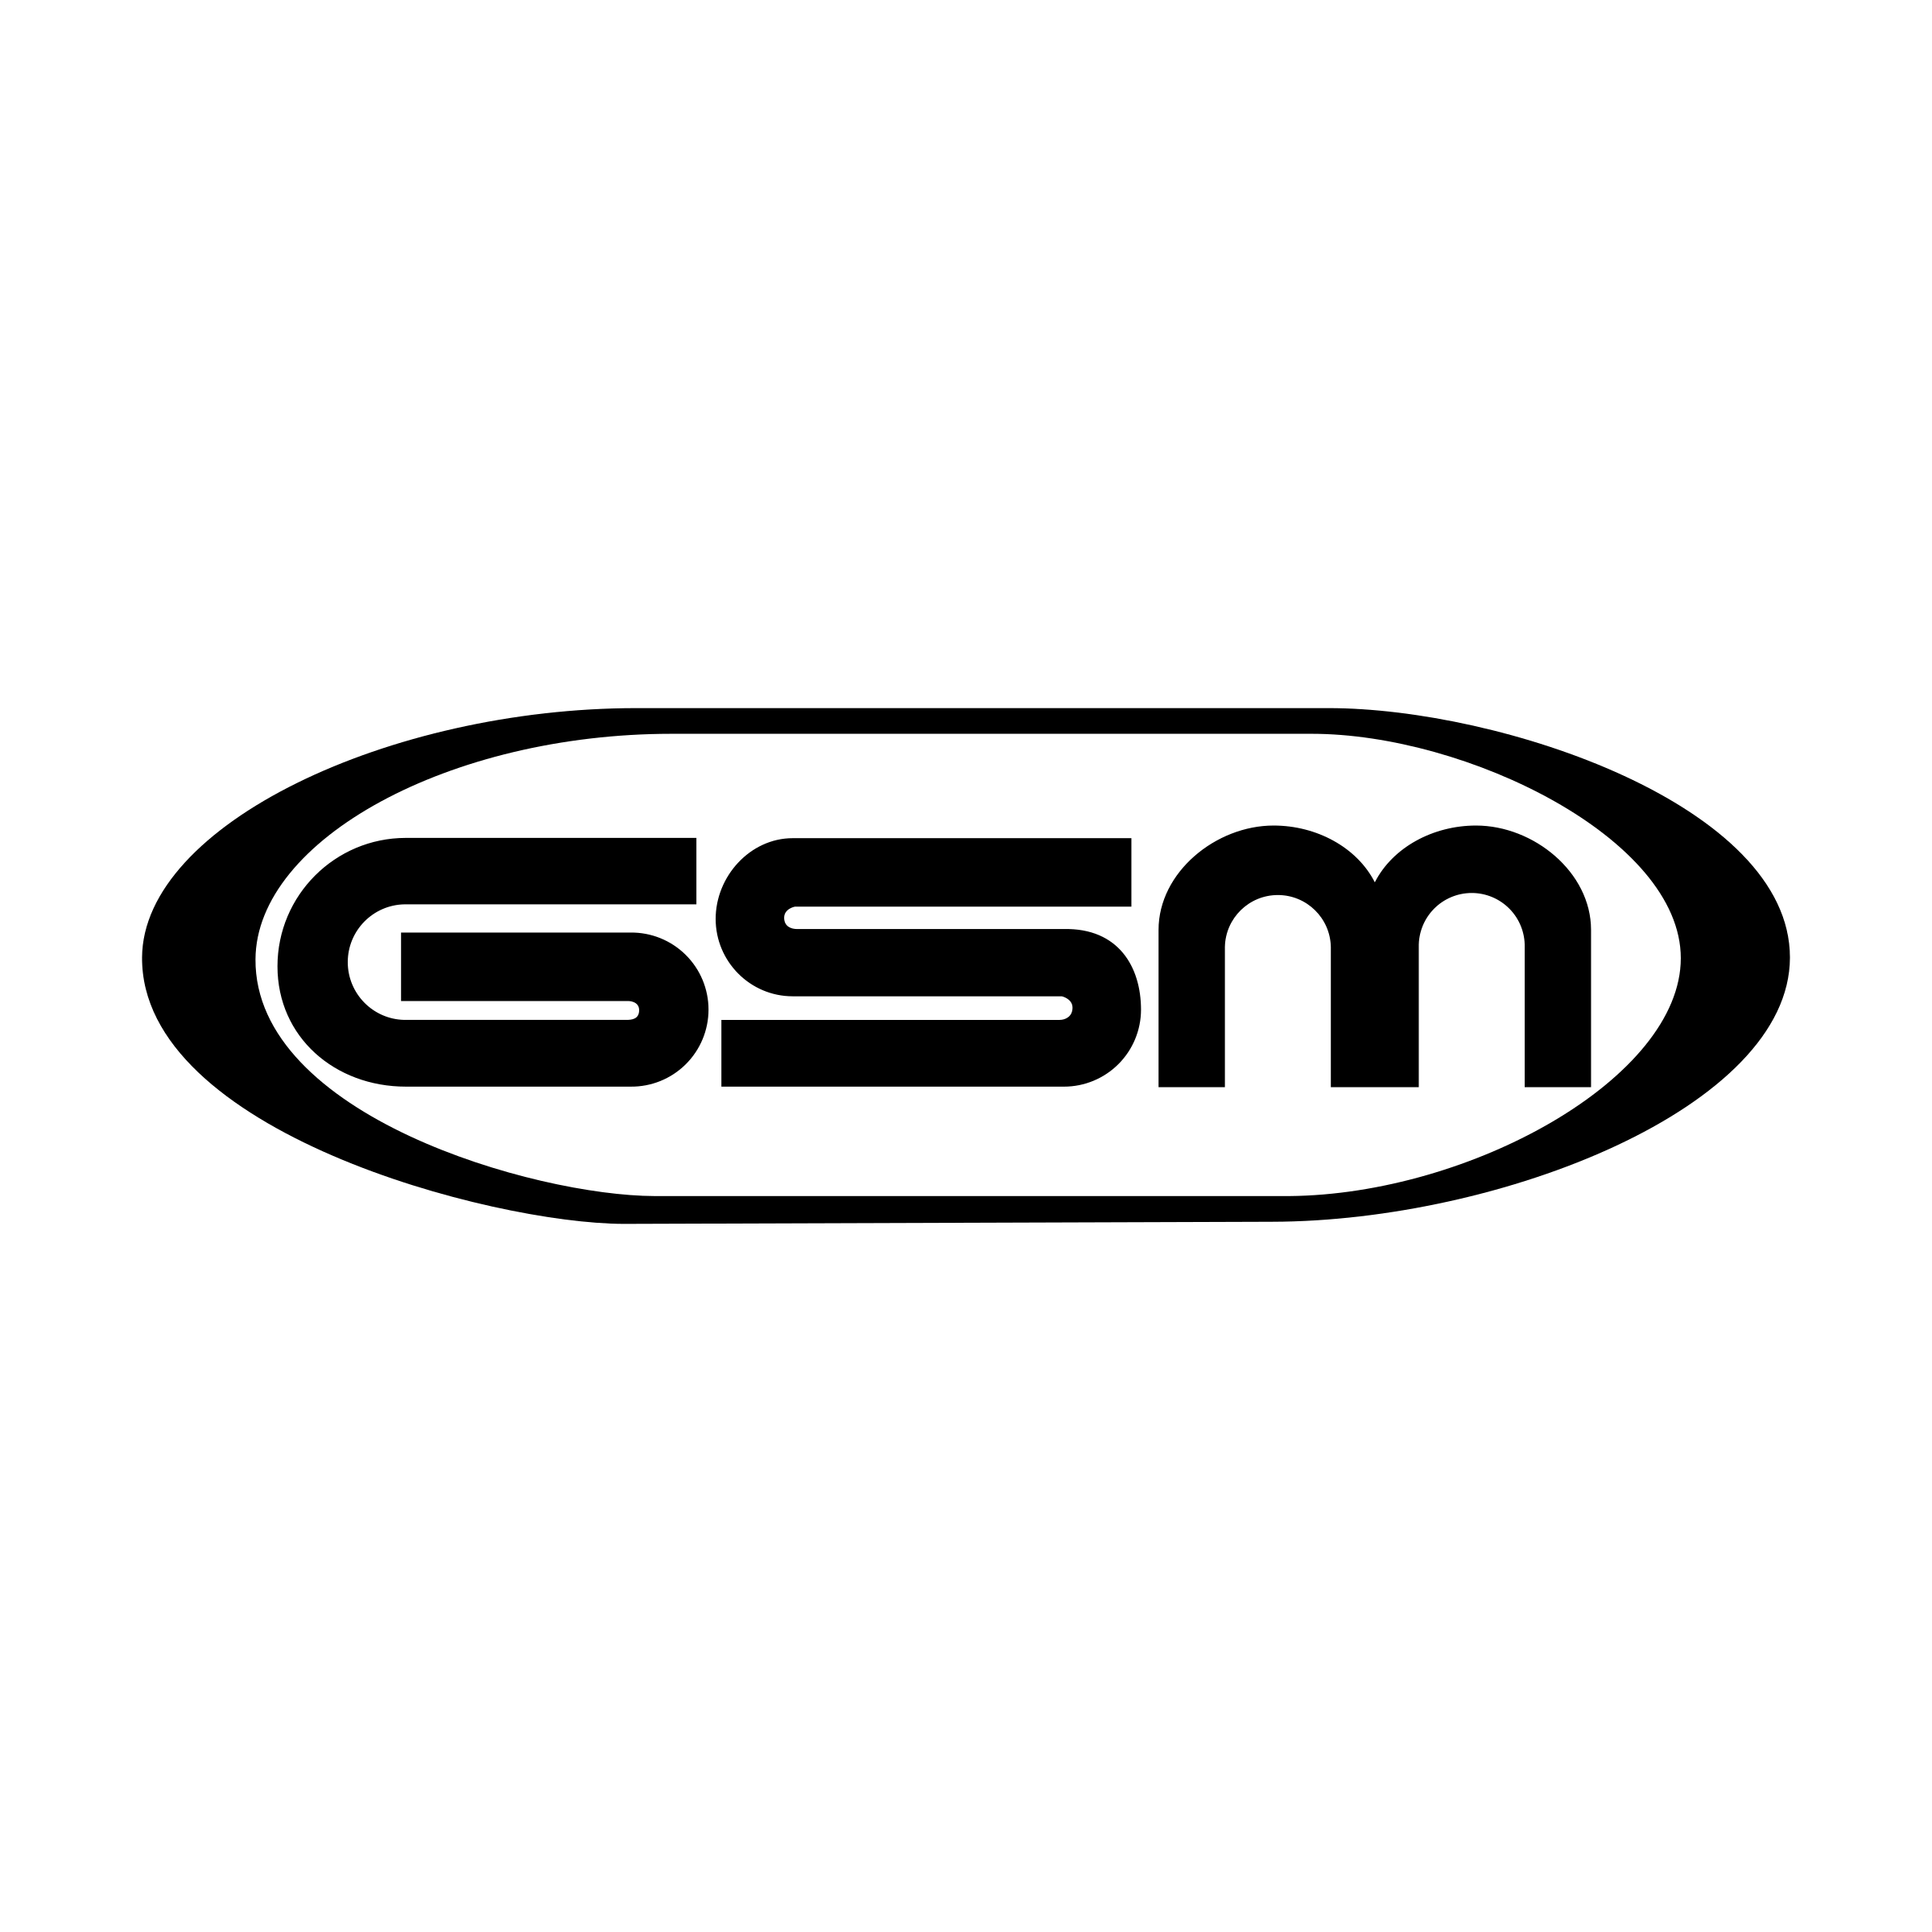 GSM Logo - GSM Logo PNG Transparent & SVG Vector - Freebie Supply